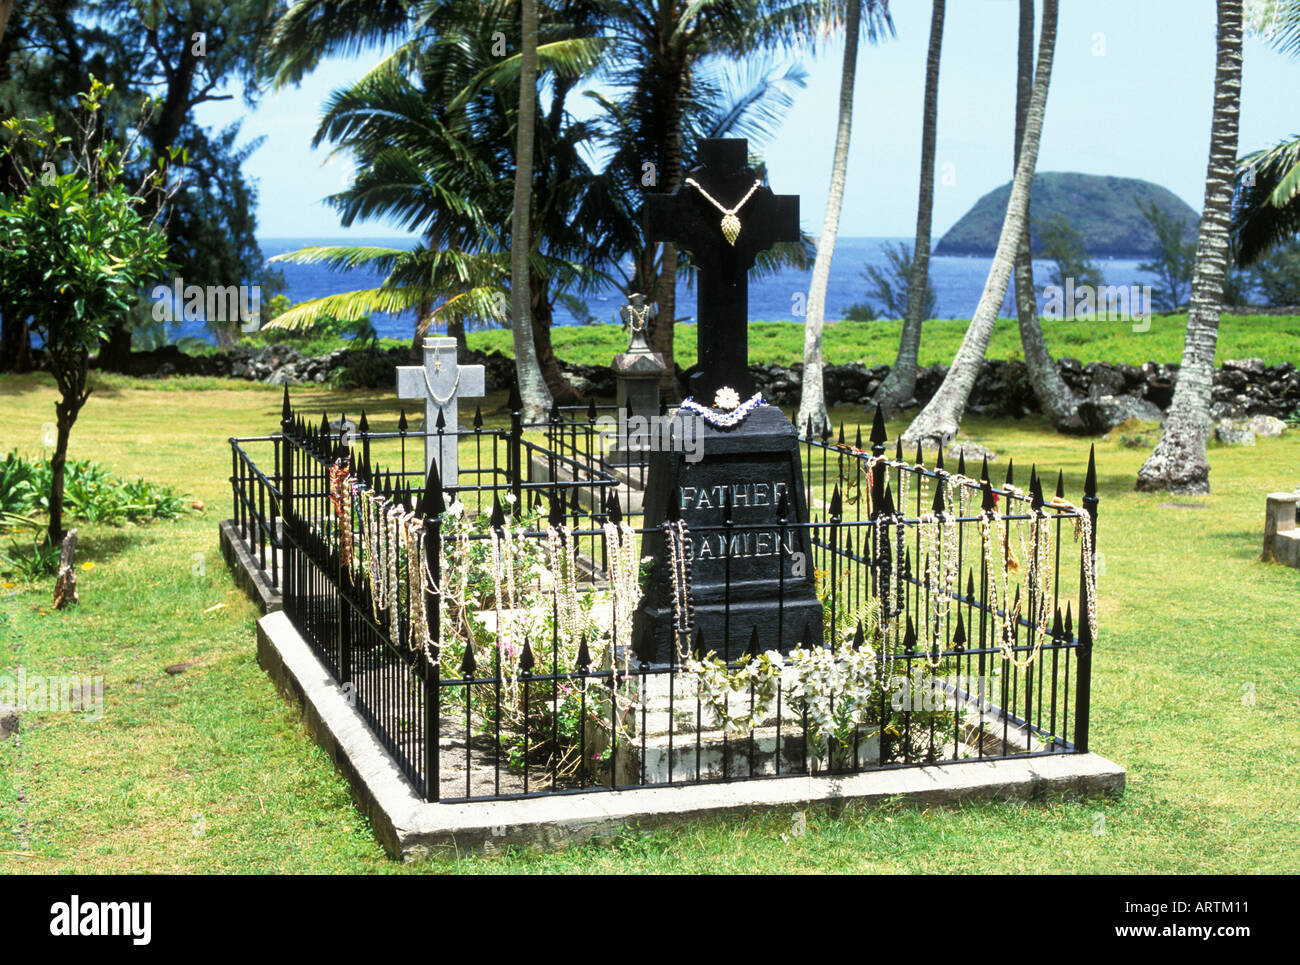 father-damian-s-grave-kalawao-molokai-hawaii-ARTM11.jpg